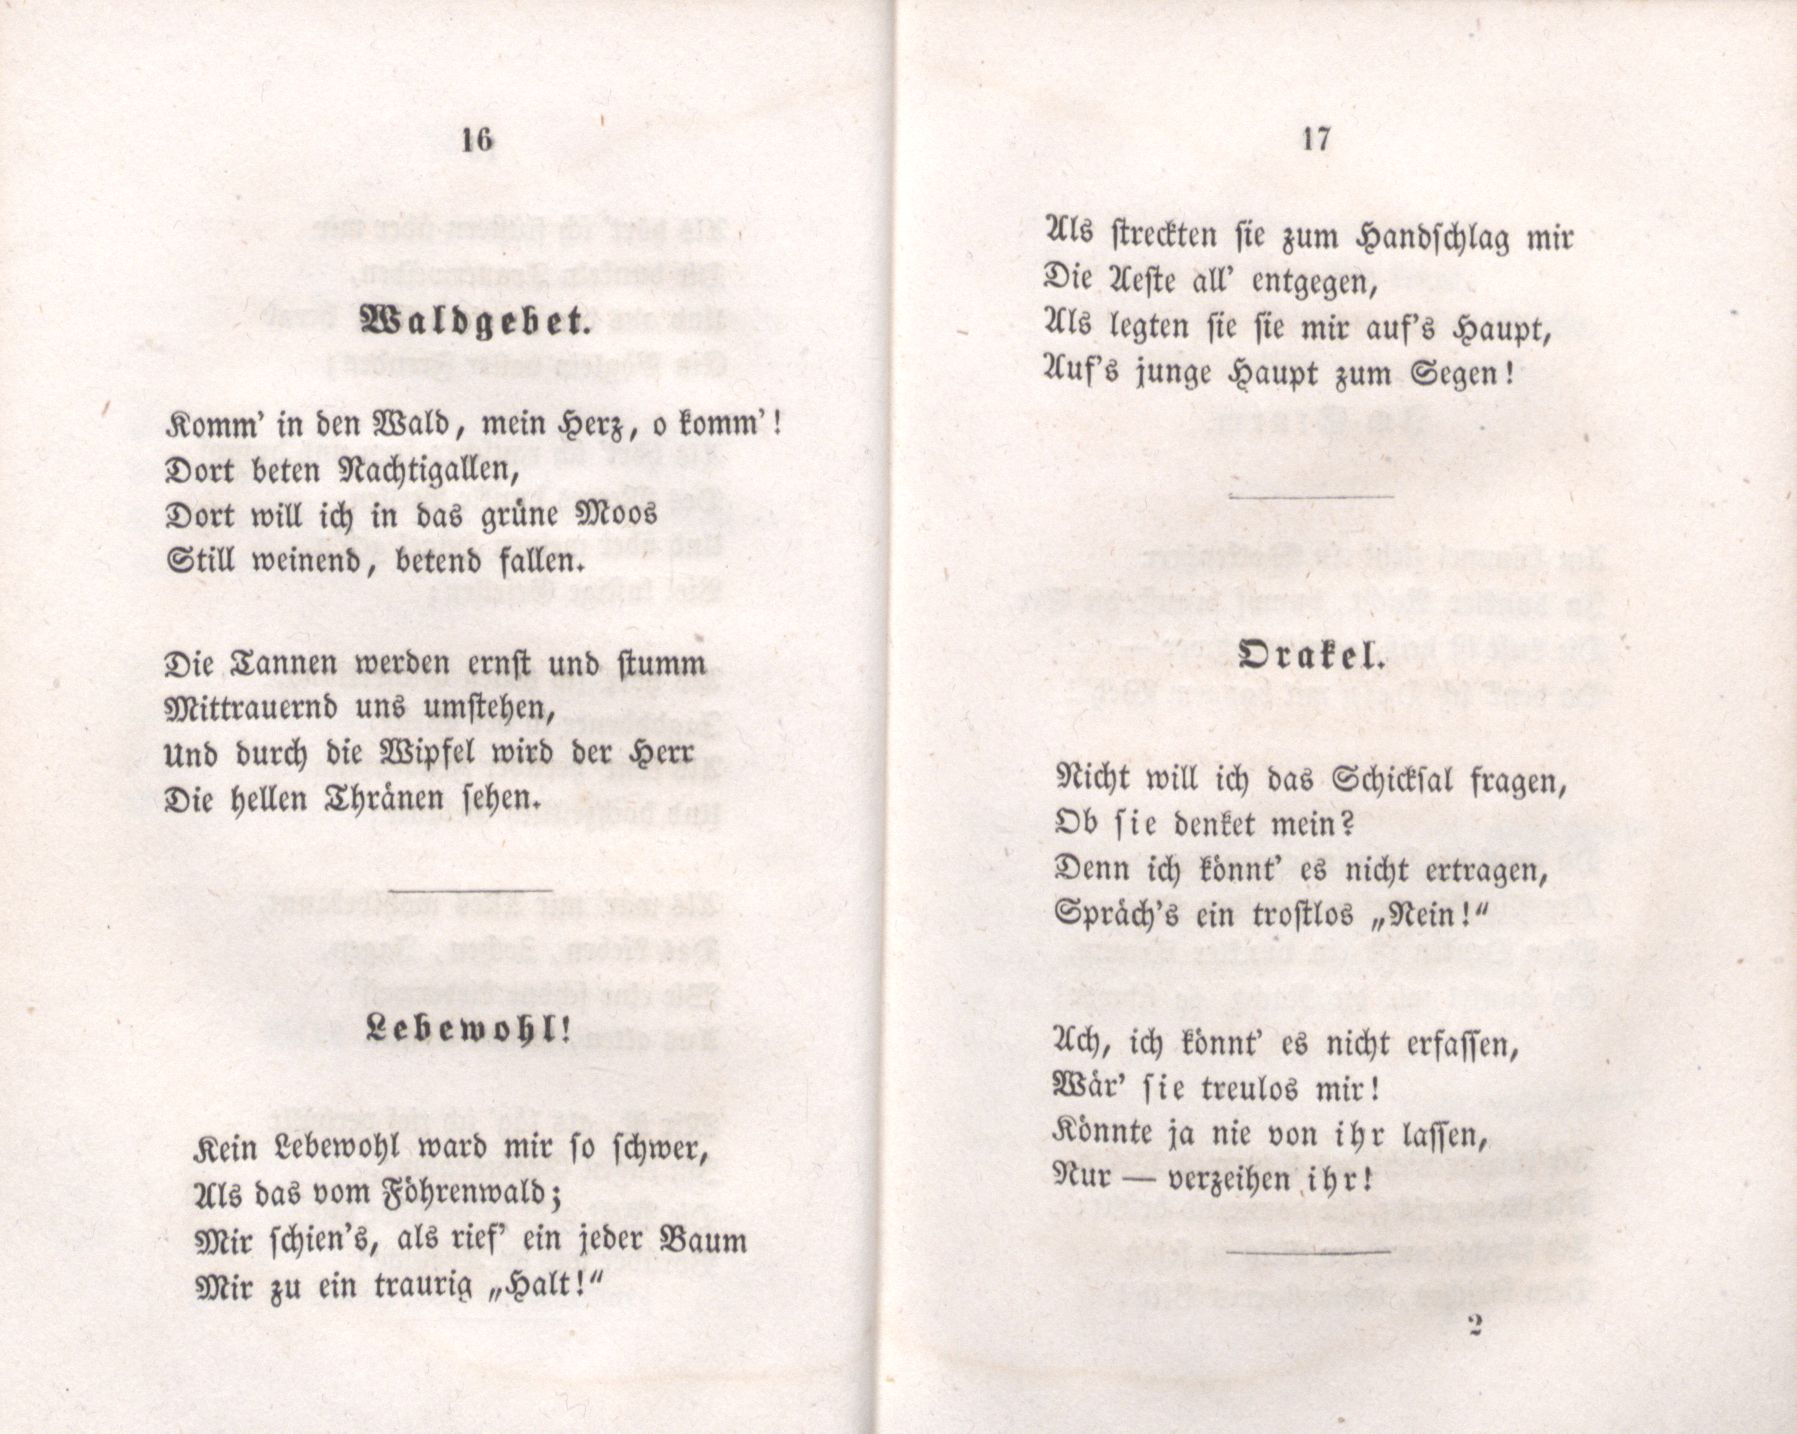 Waldgebet (1849) | 1. (16-17) Haupttext